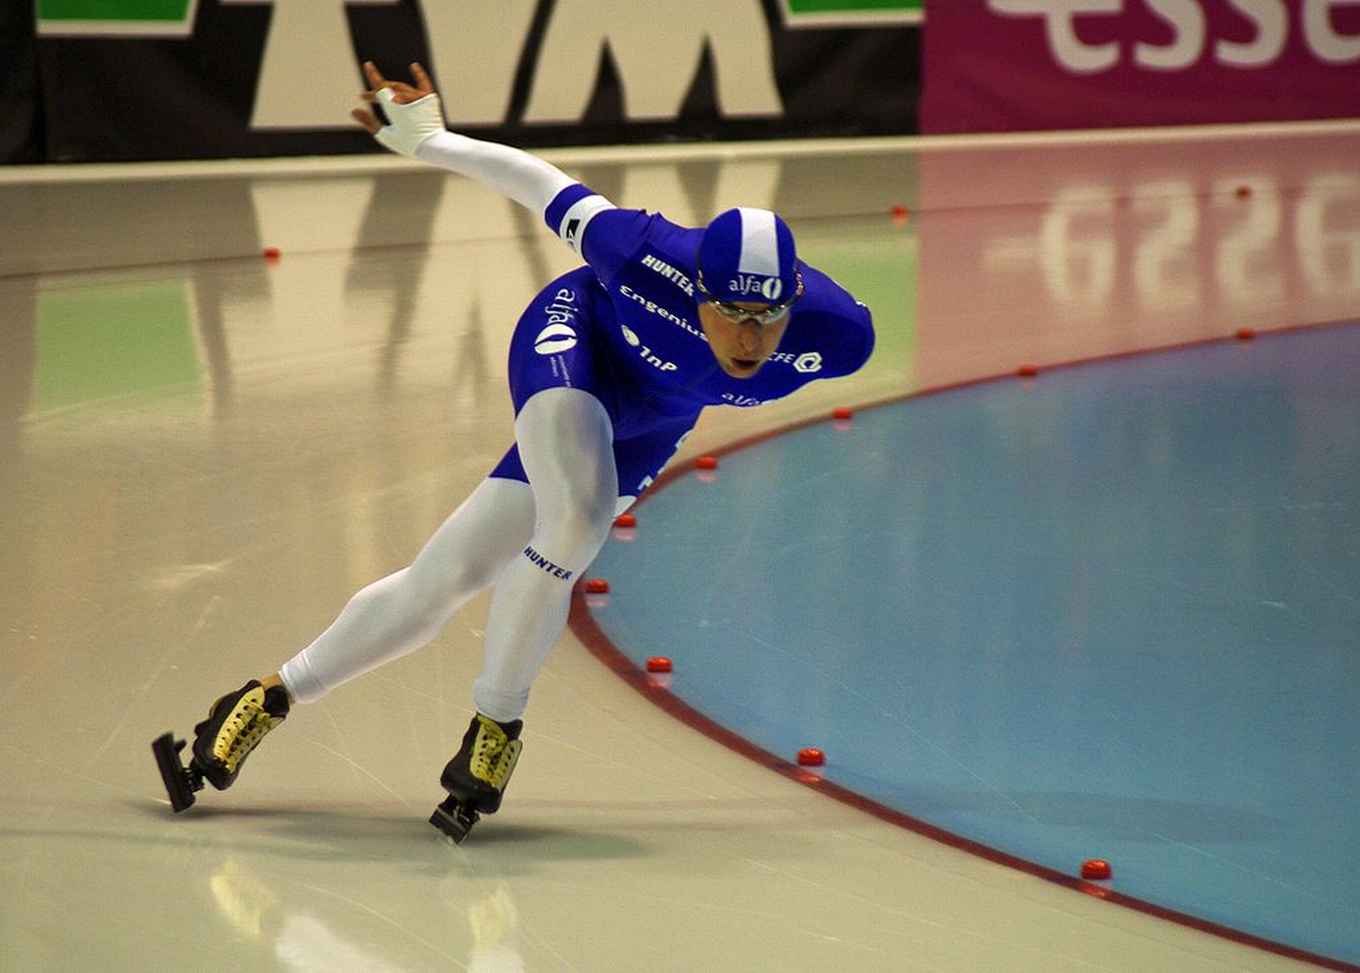 Speed skater Arjen van der Kieft